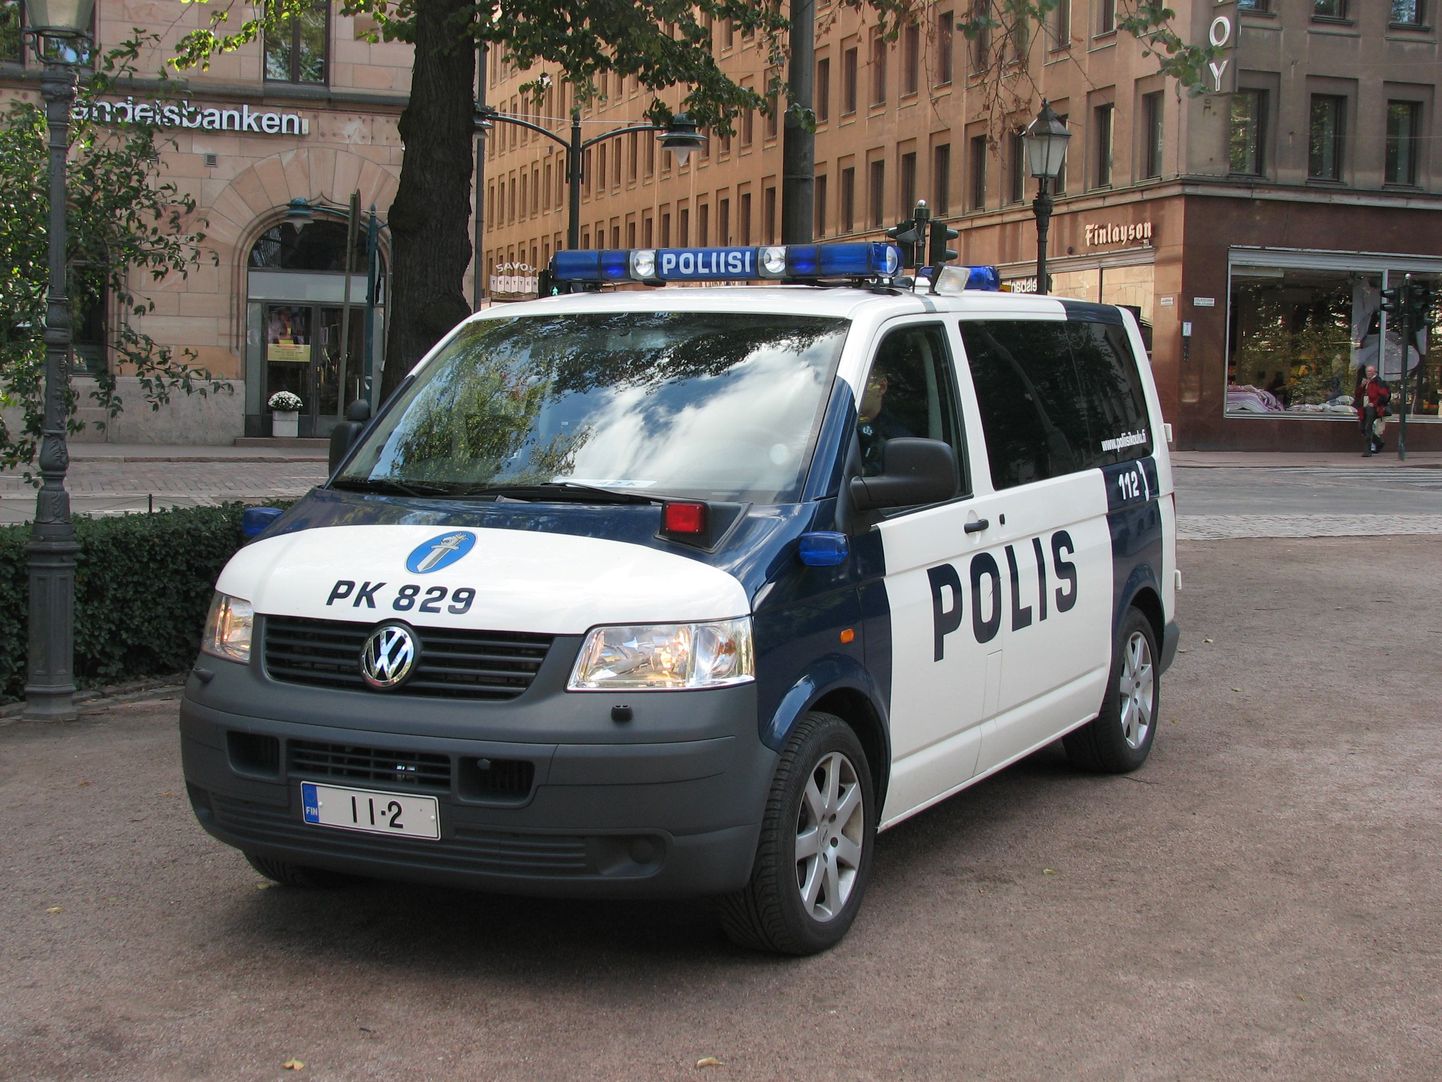 Helsingi politseiauto